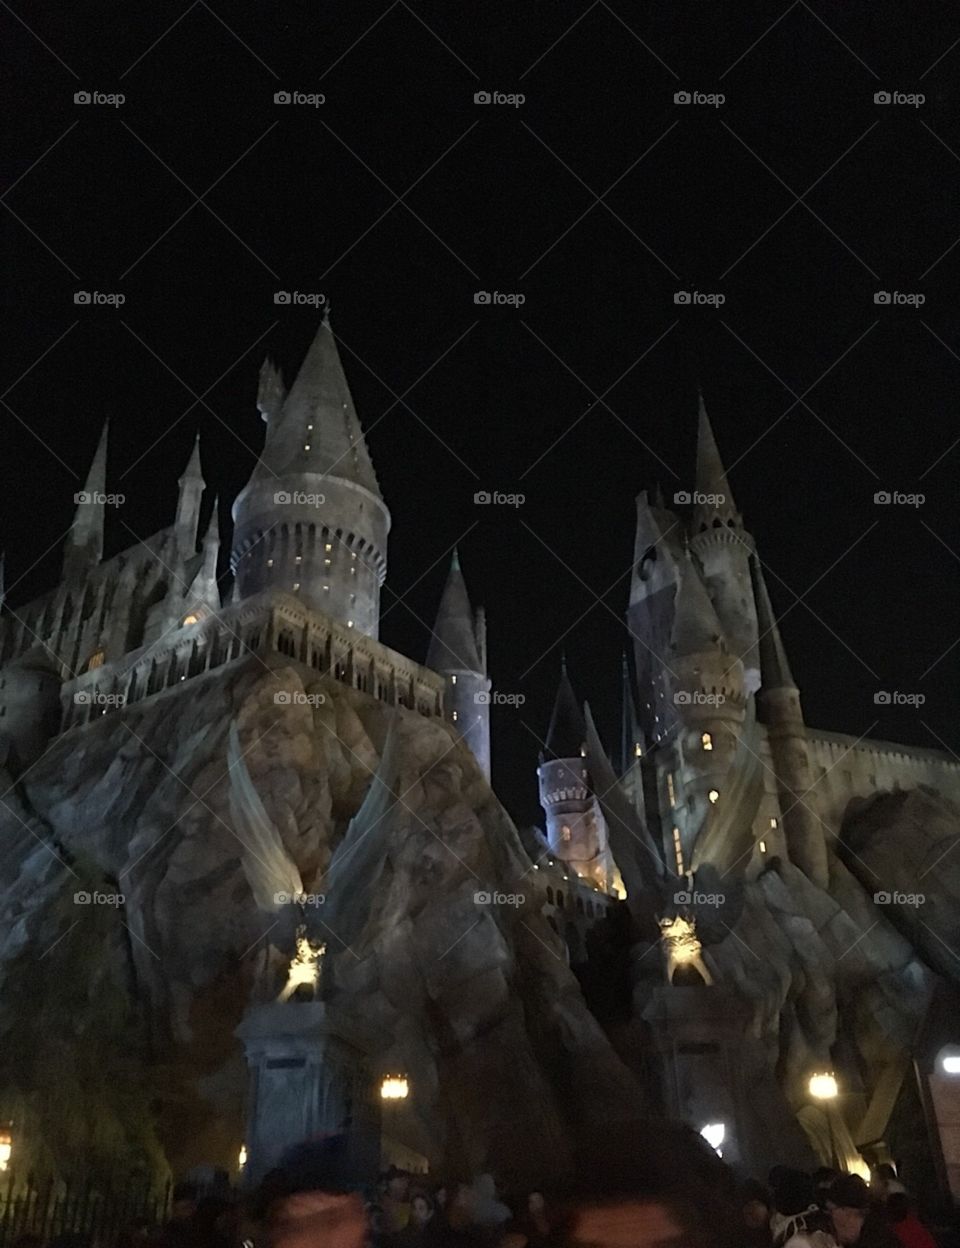 Hogwarts at night. Universal Studios Hollywood, CA 